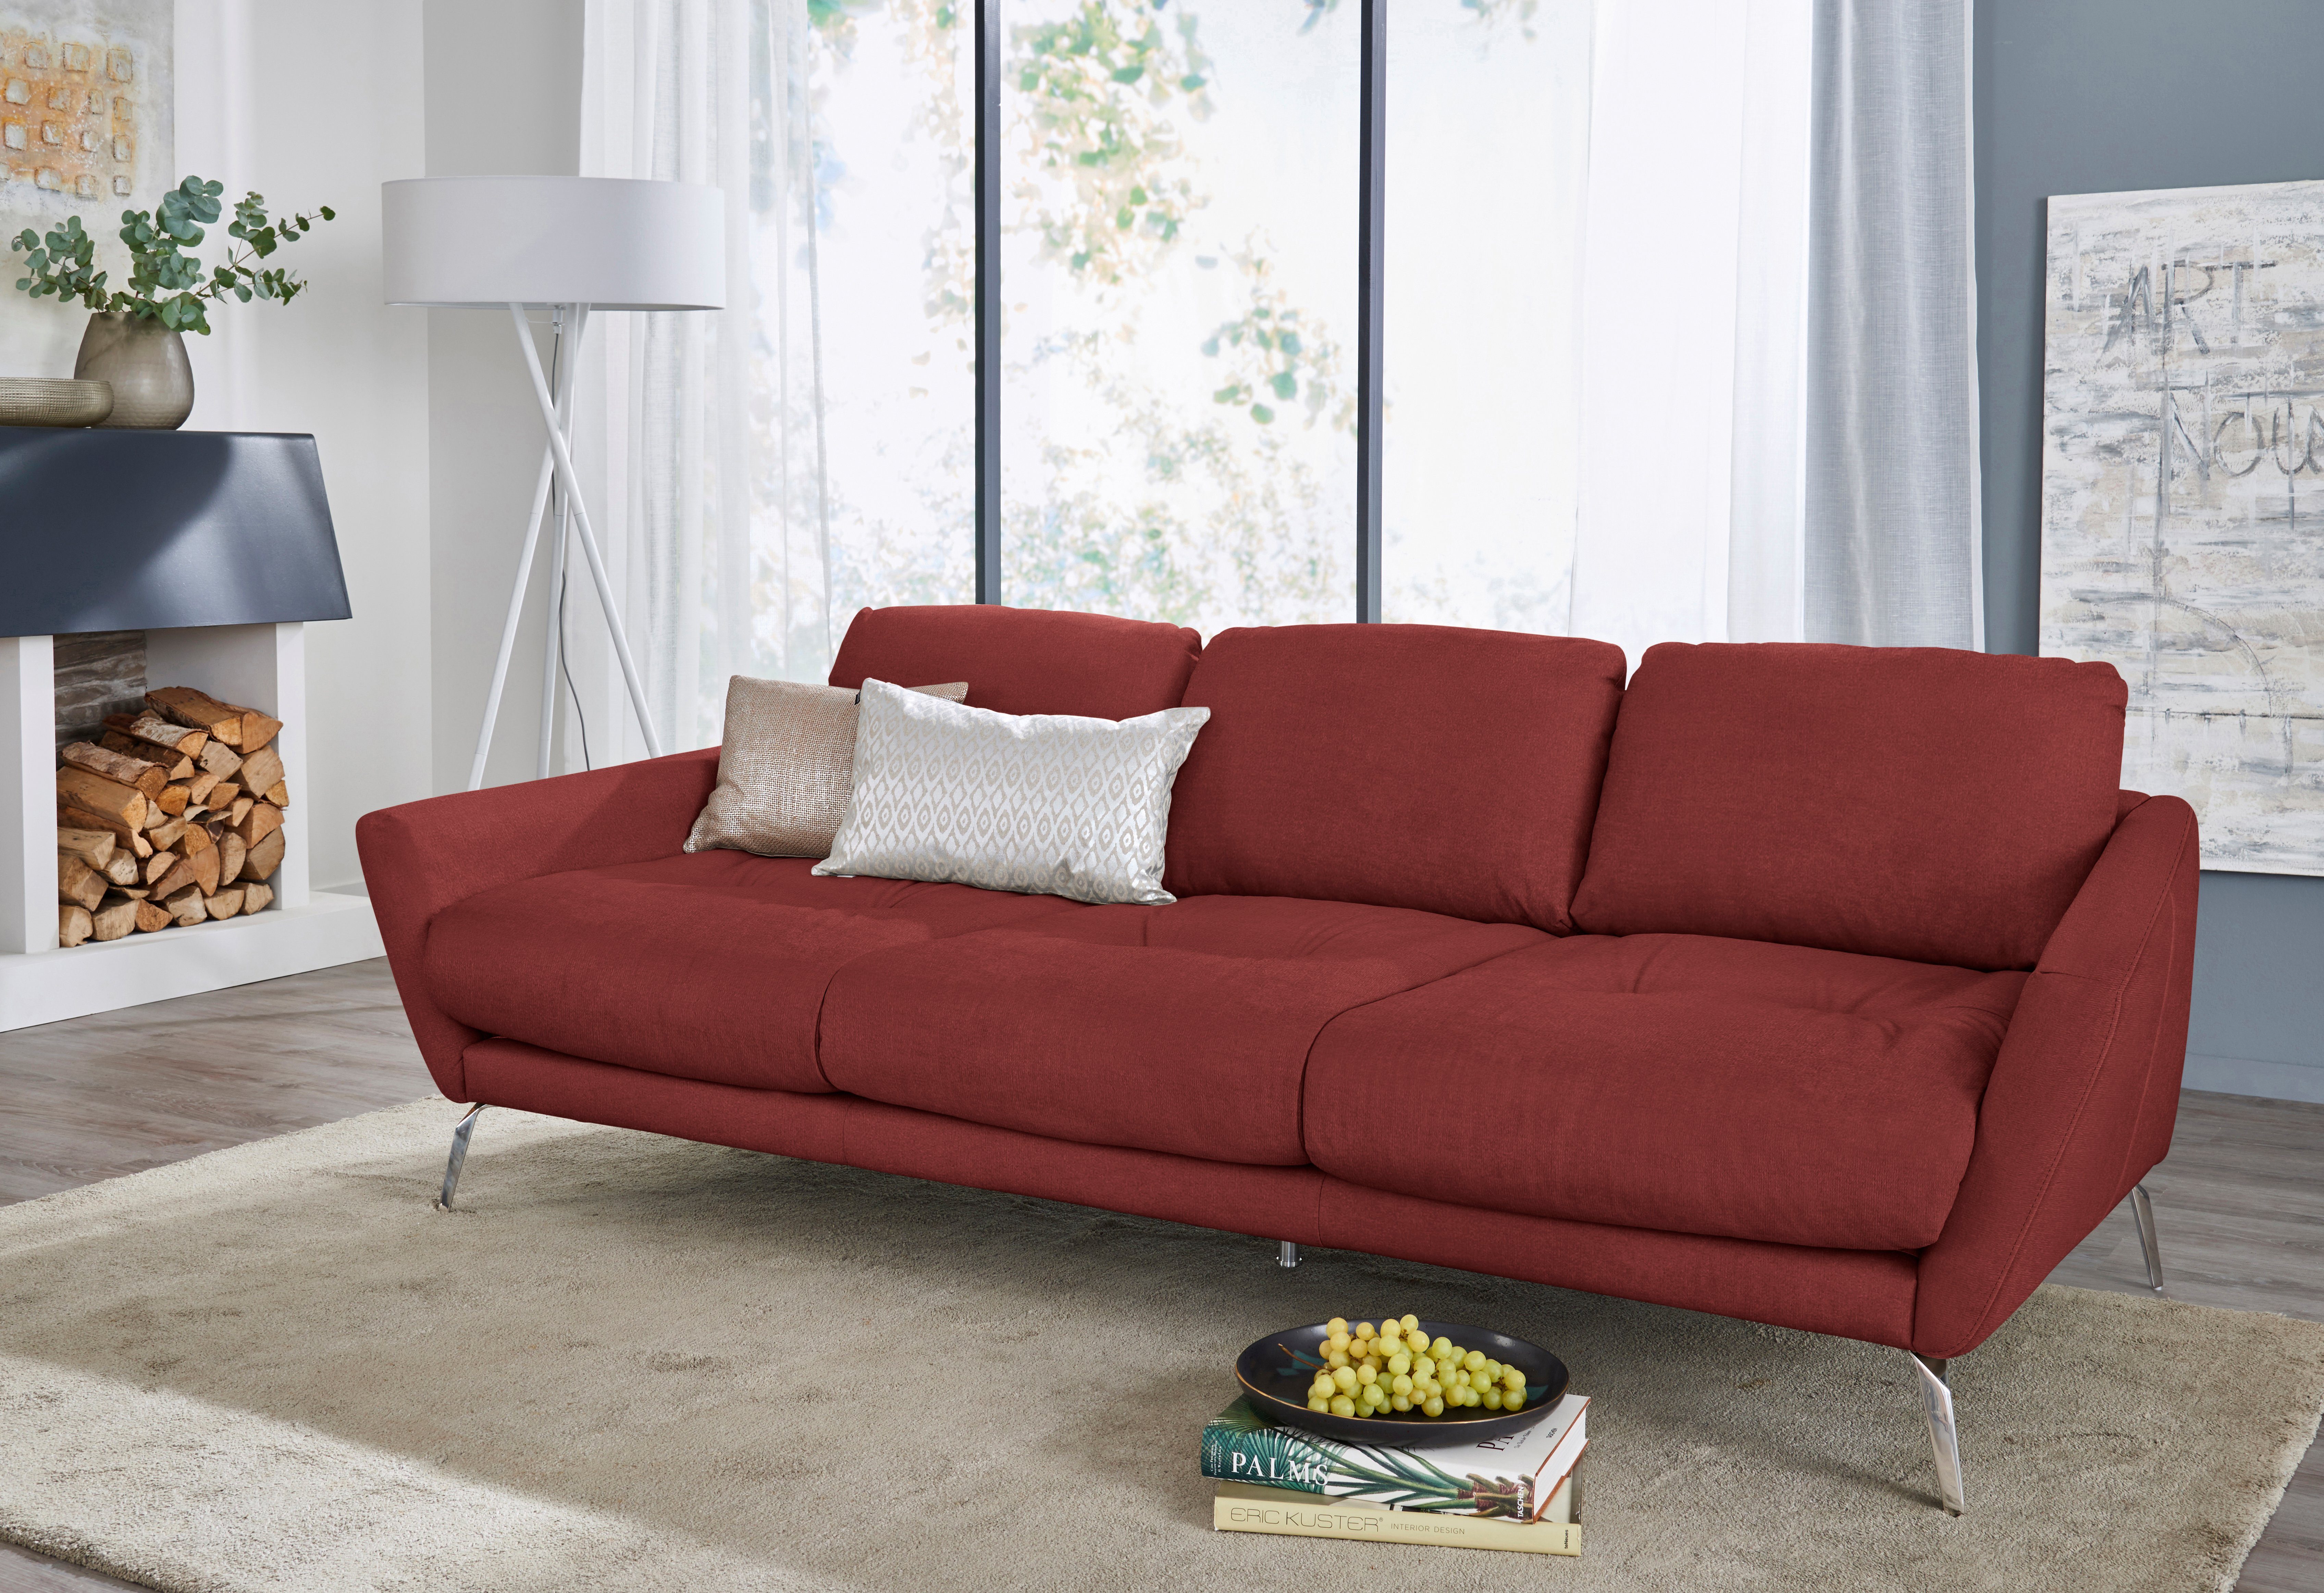 W.SCHILLIG Big-Sofa softy, mit dekorativer Heftung im Sitz, Füße Chrom glänzend